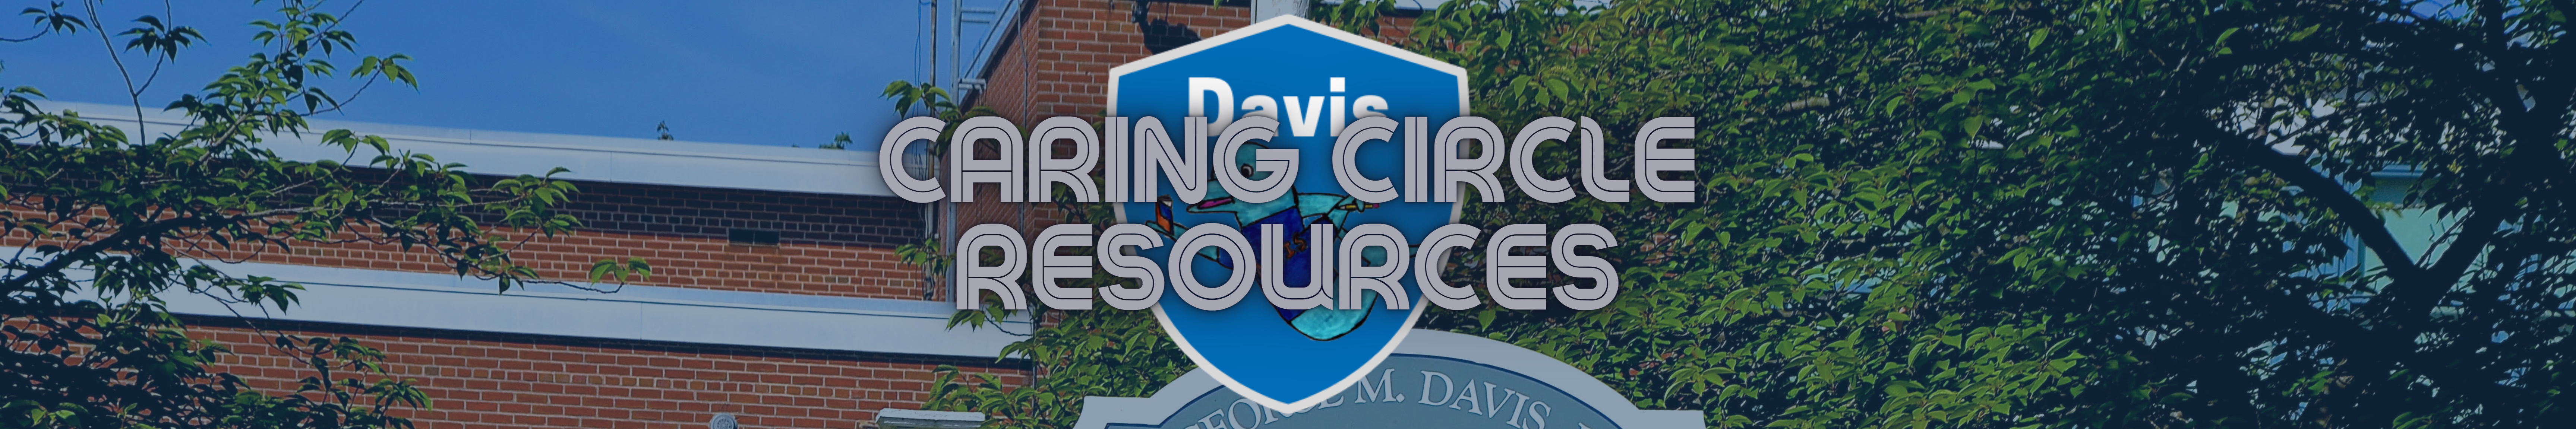 Caring Circle Resources banner